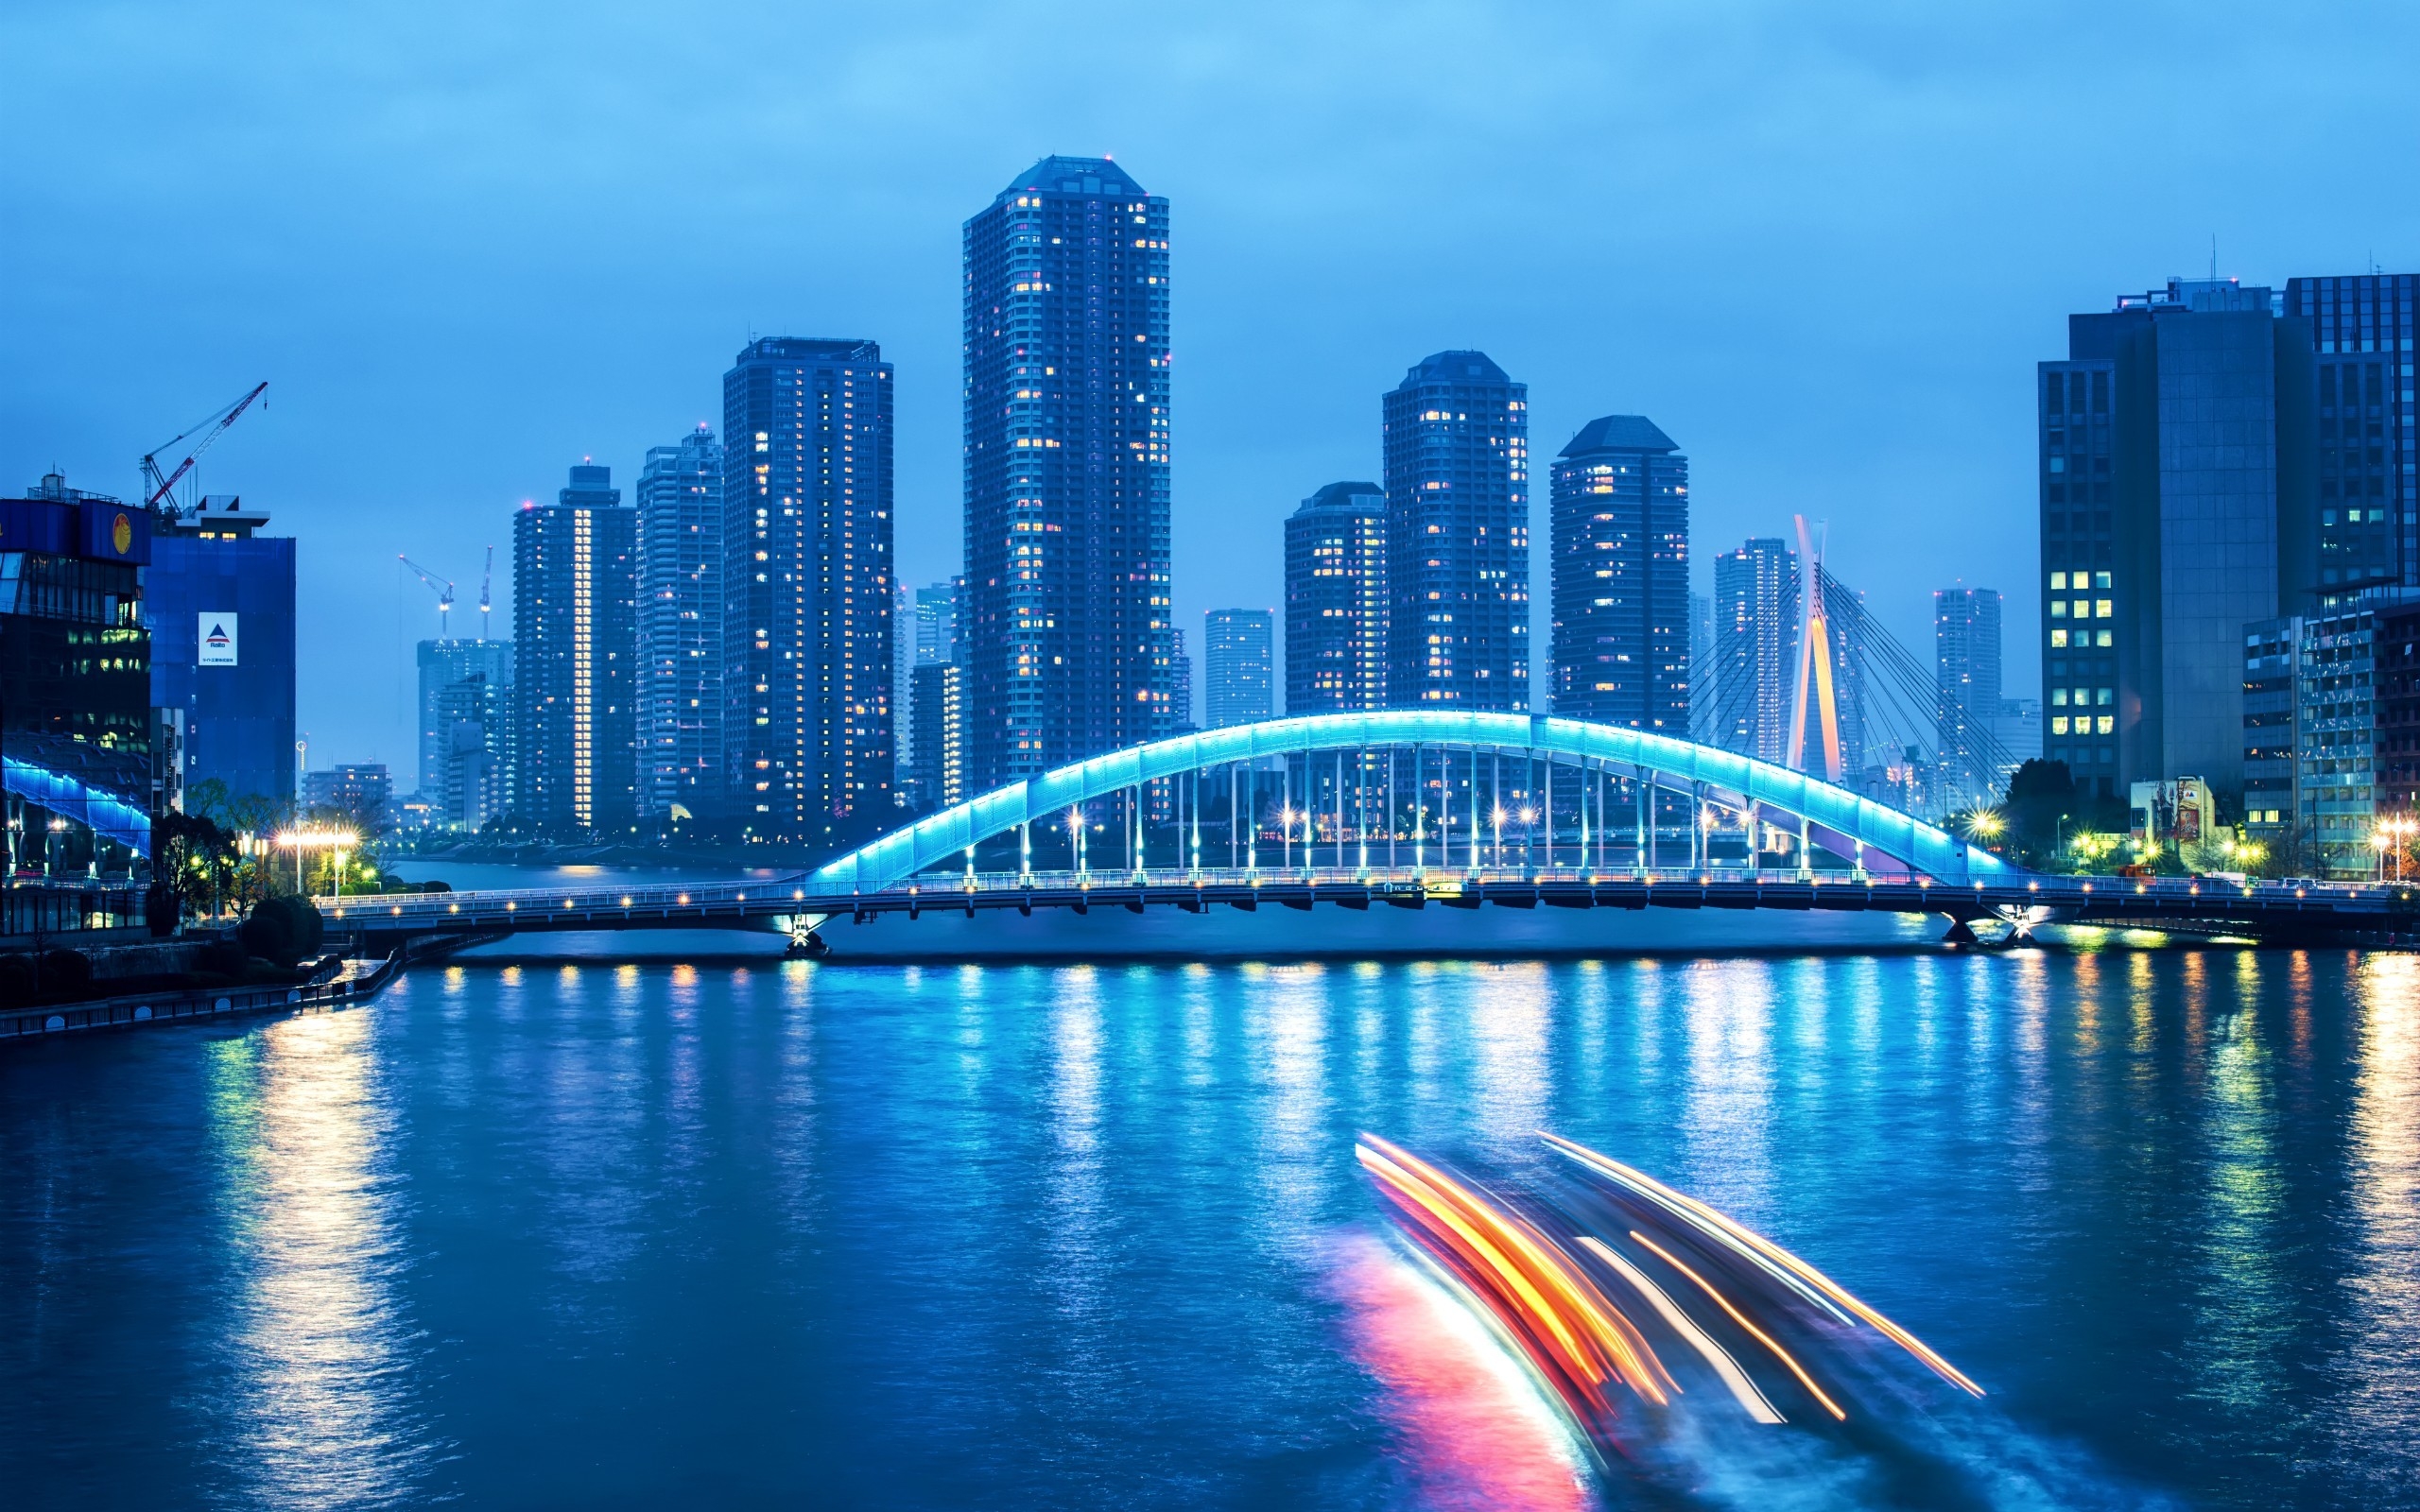 Tokyo Night Bridge Landscape for 2560 x 1600 widescreen resolution